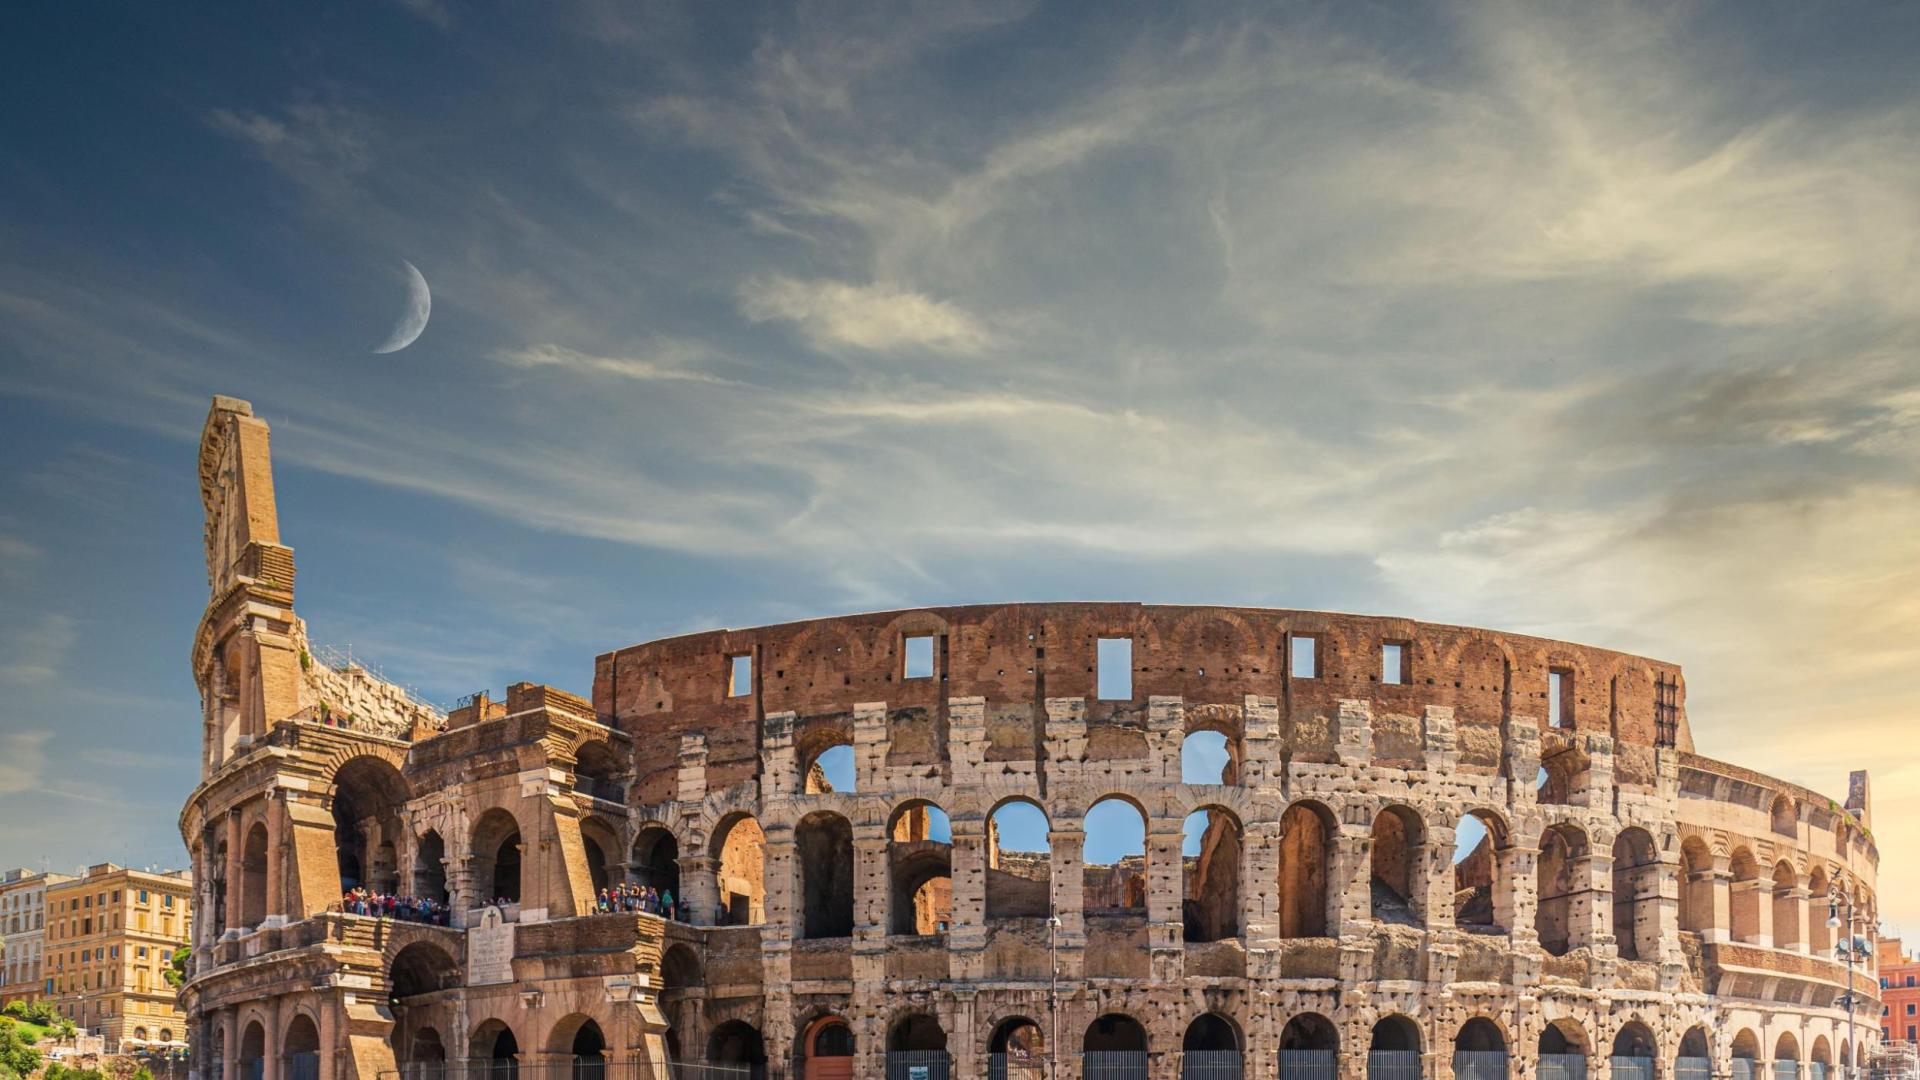 Das Kolosseum in Rom, ein ikonisches antikes Amphitheater.